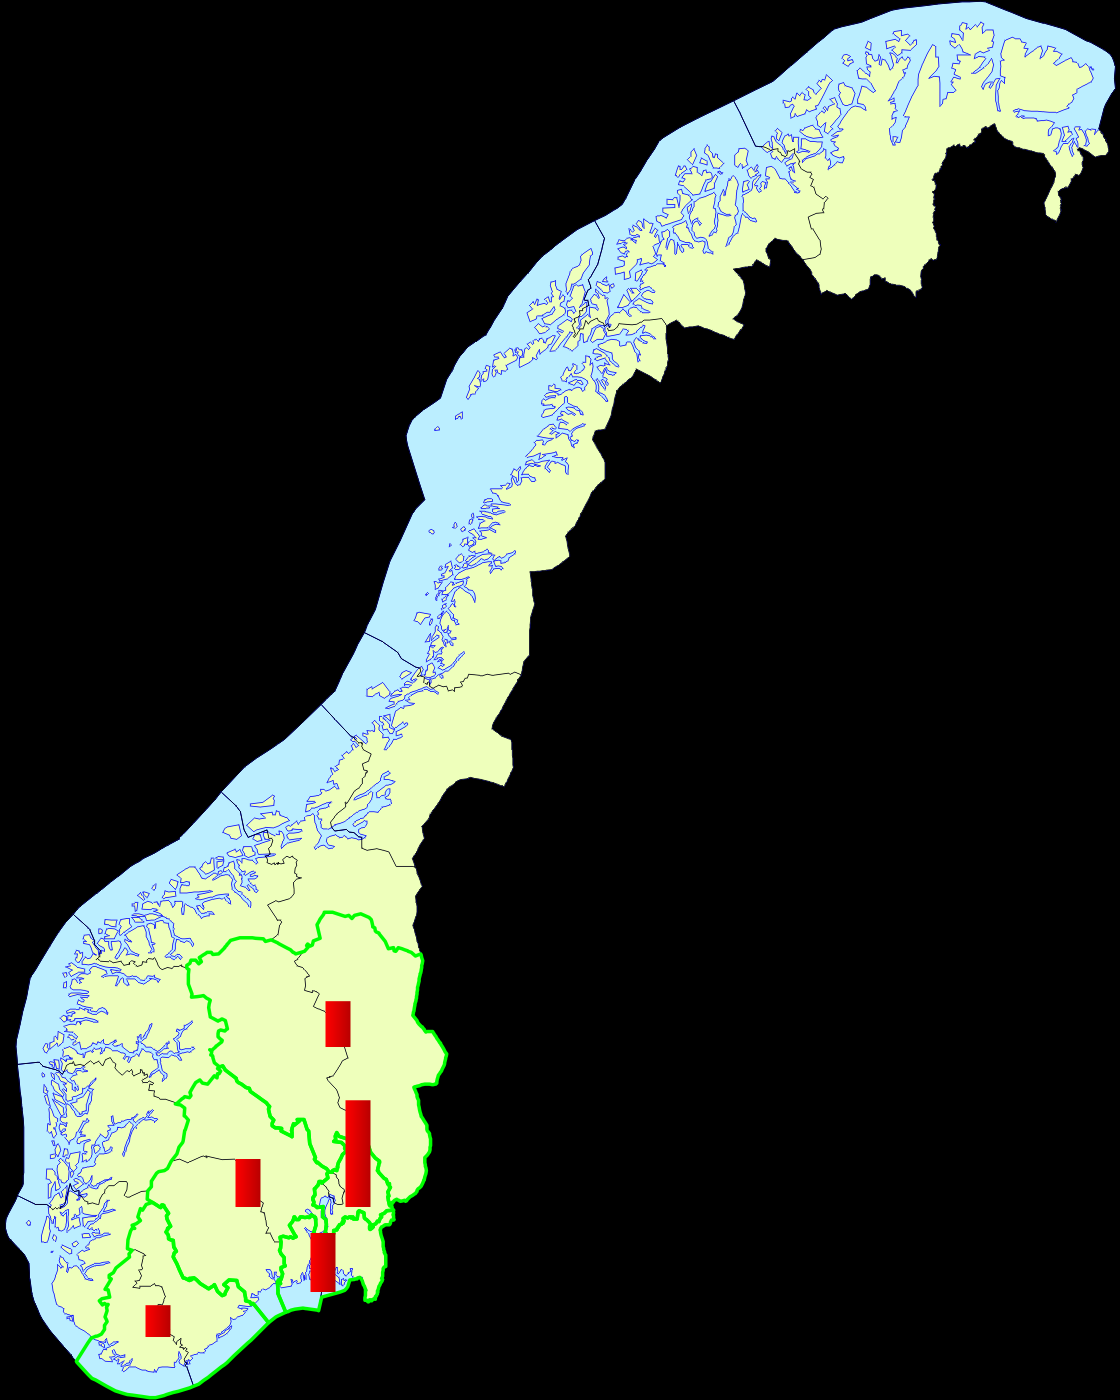 Personbiltrafikken (2014) Personbil-km Folketal Oslo og Akershus 21,3 % 23,8 % Østfold og Vestfold 11,9 % 10,3 % Hedmark og Oppland 9,2 % 7,5 % Buskerud og Telemark 9,7 % 8,7 % Aust-Agder og